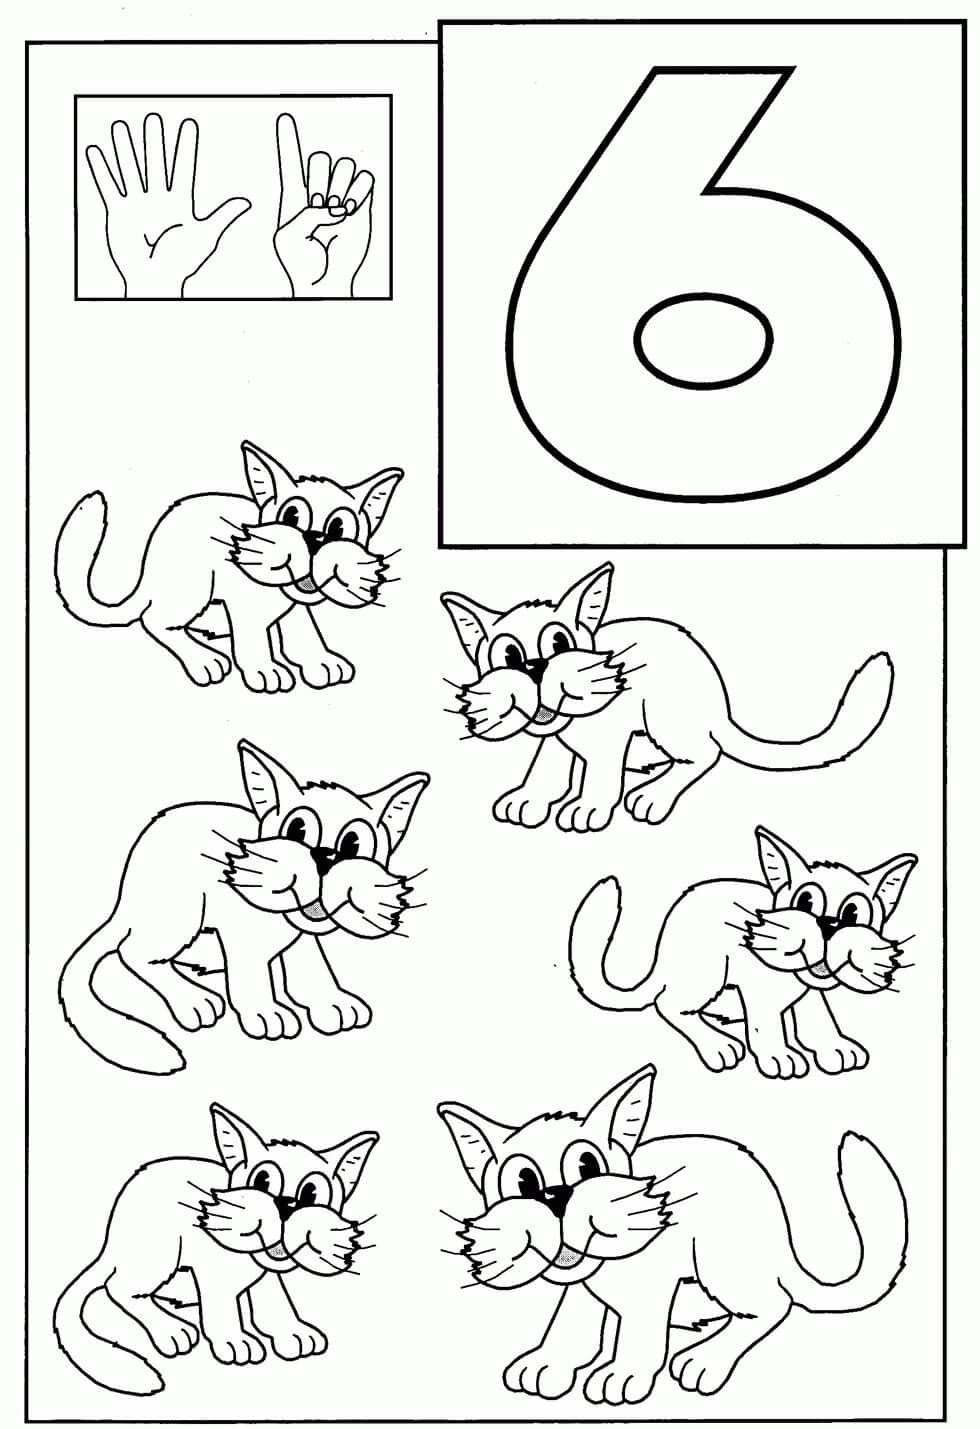 Dibujos de Gato Número Seis y Seis para colorear